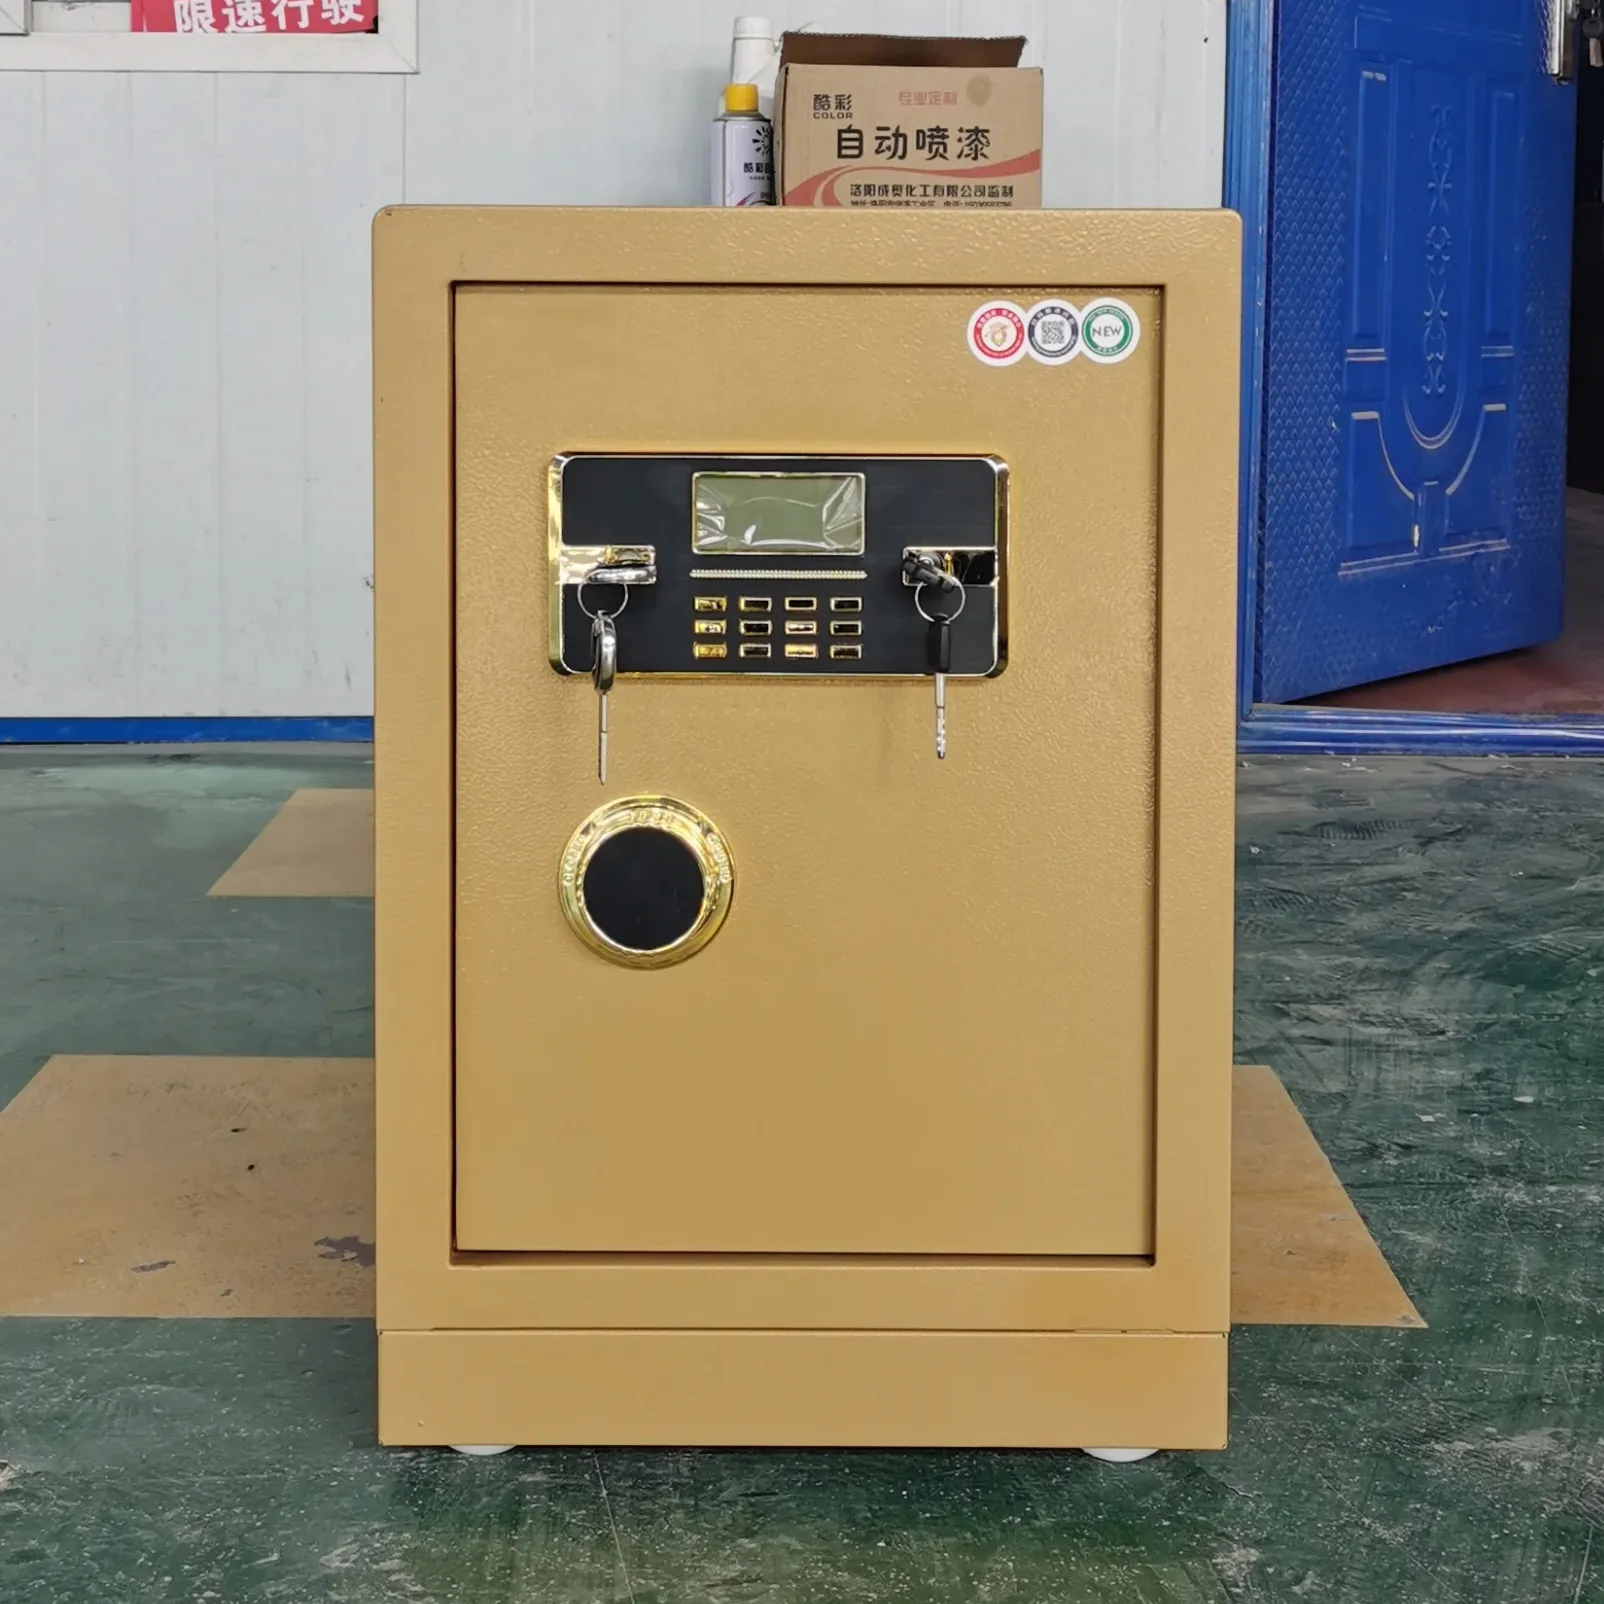 Factory Money Safe Box Security Safety Deposit Box Fireproof Safes